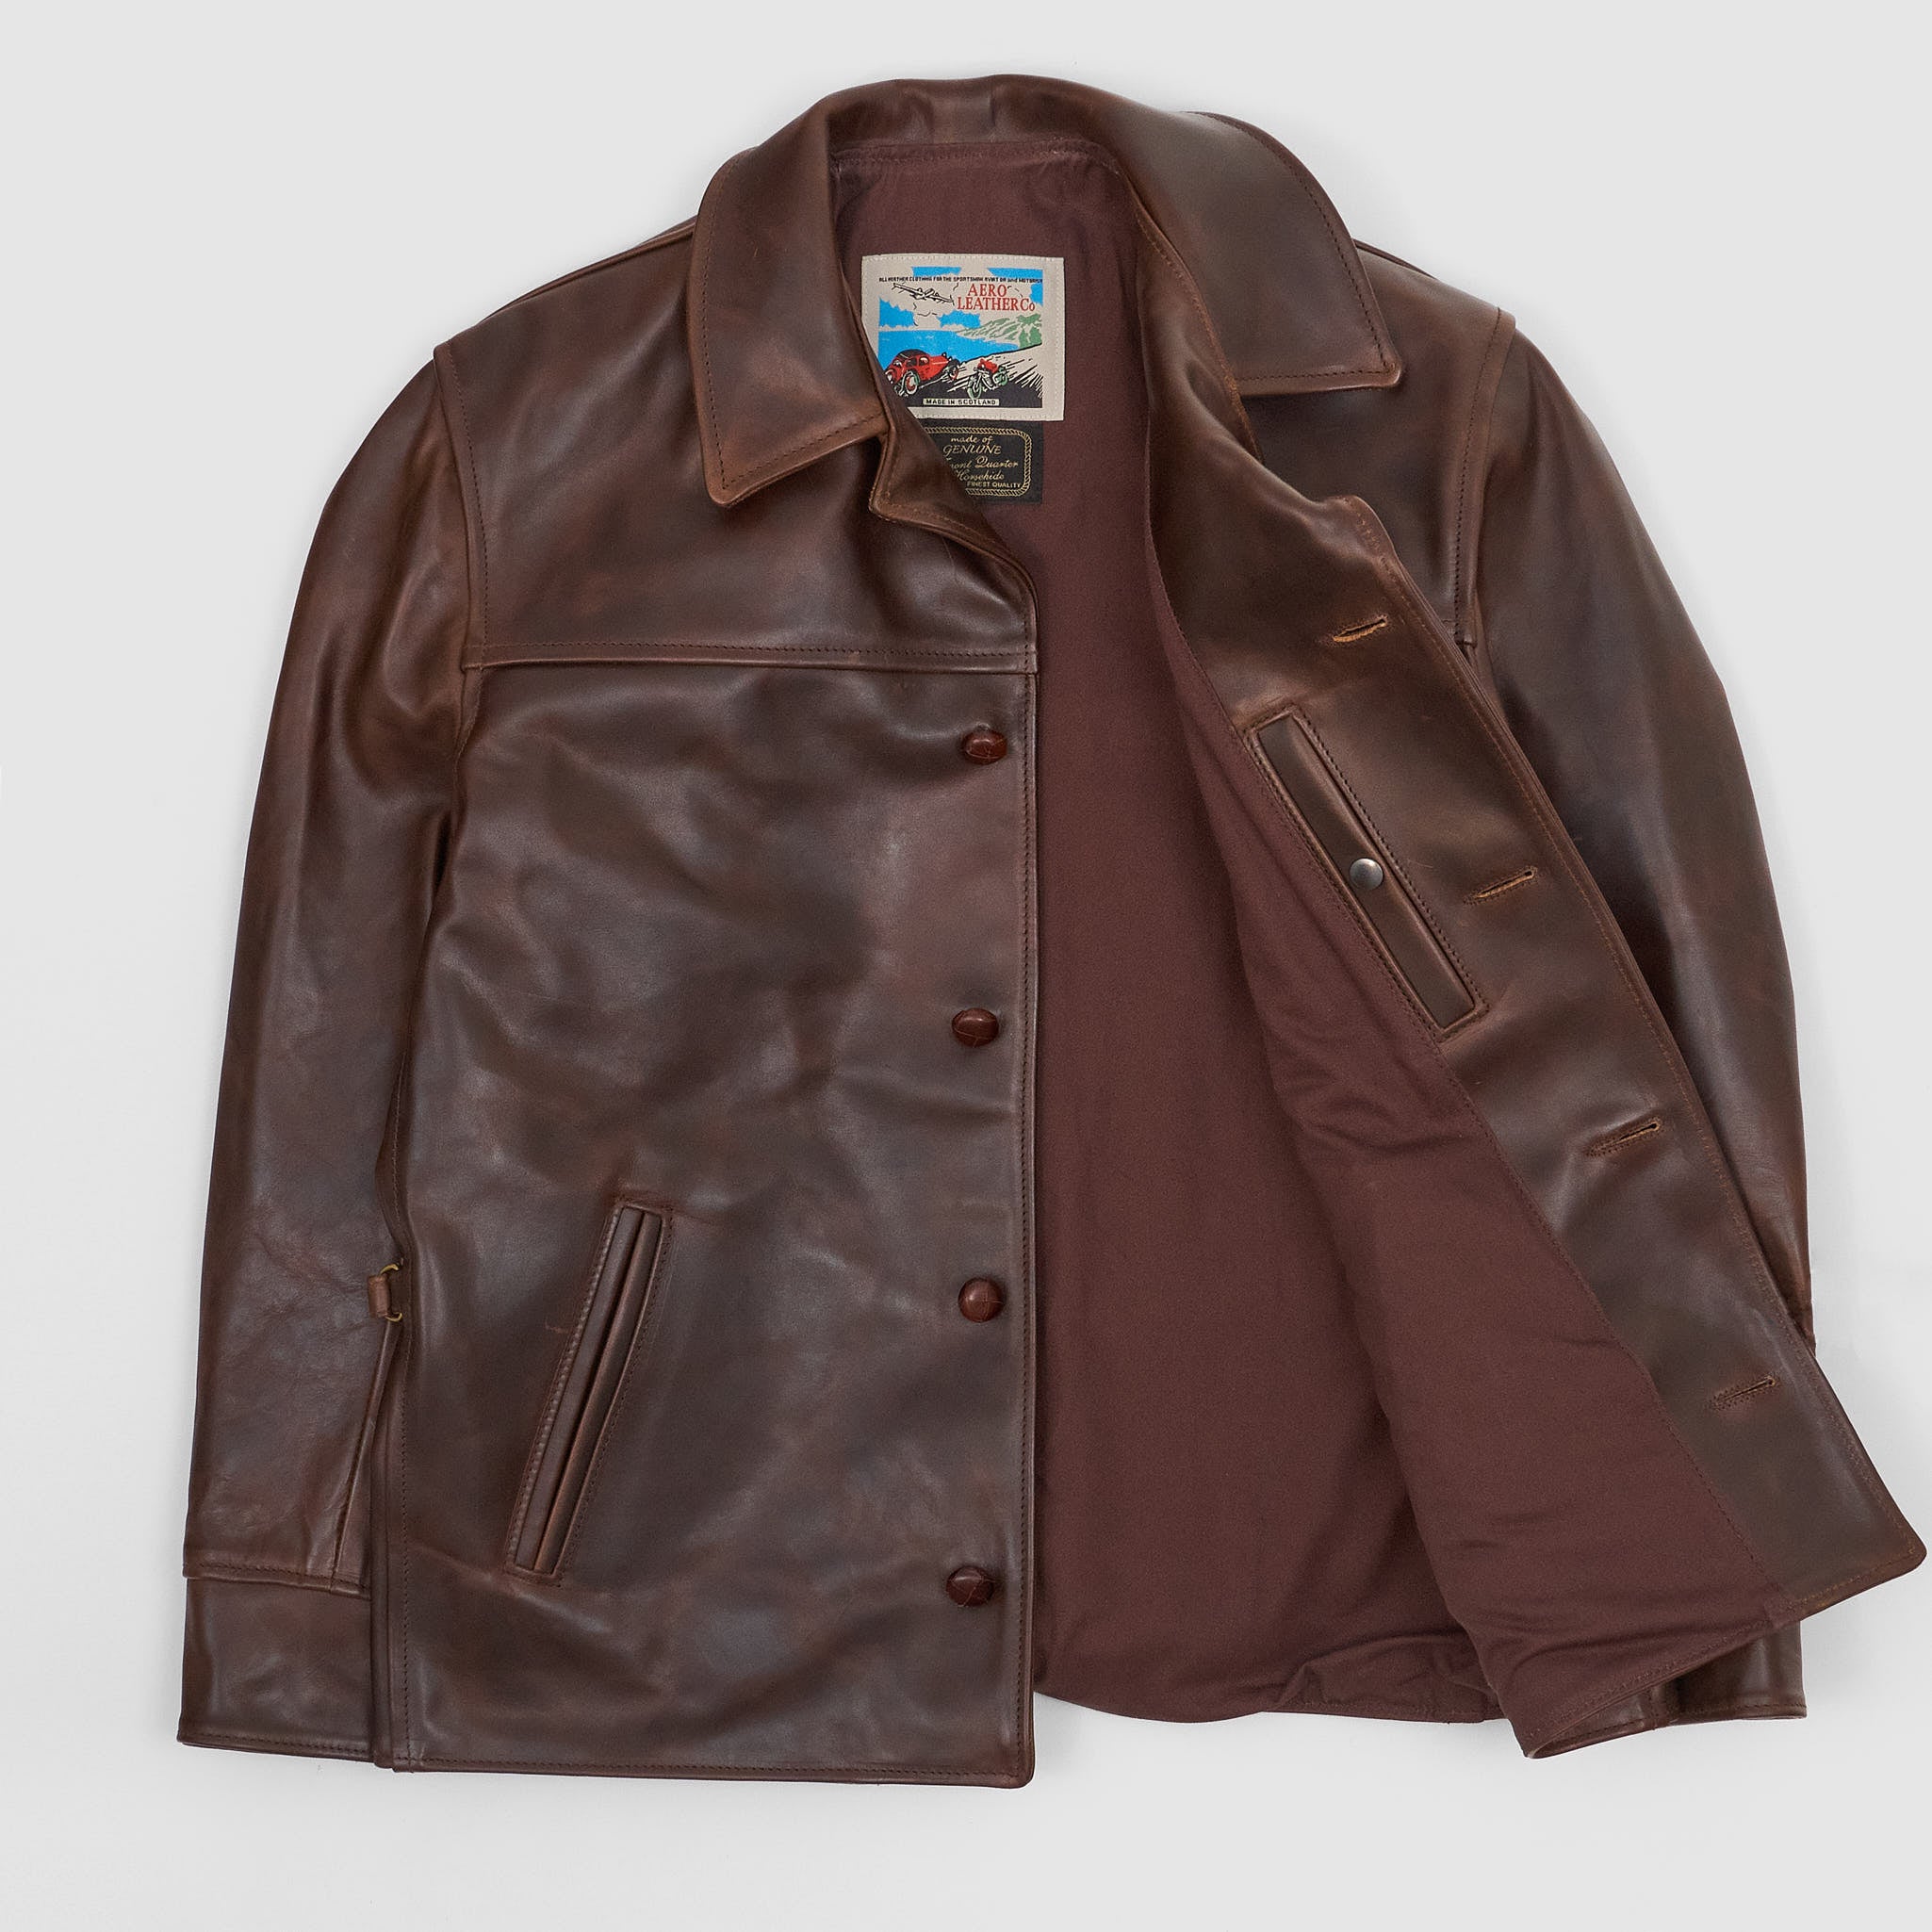 Aero Leathers Teamster Leather Jacket - DeeCee style